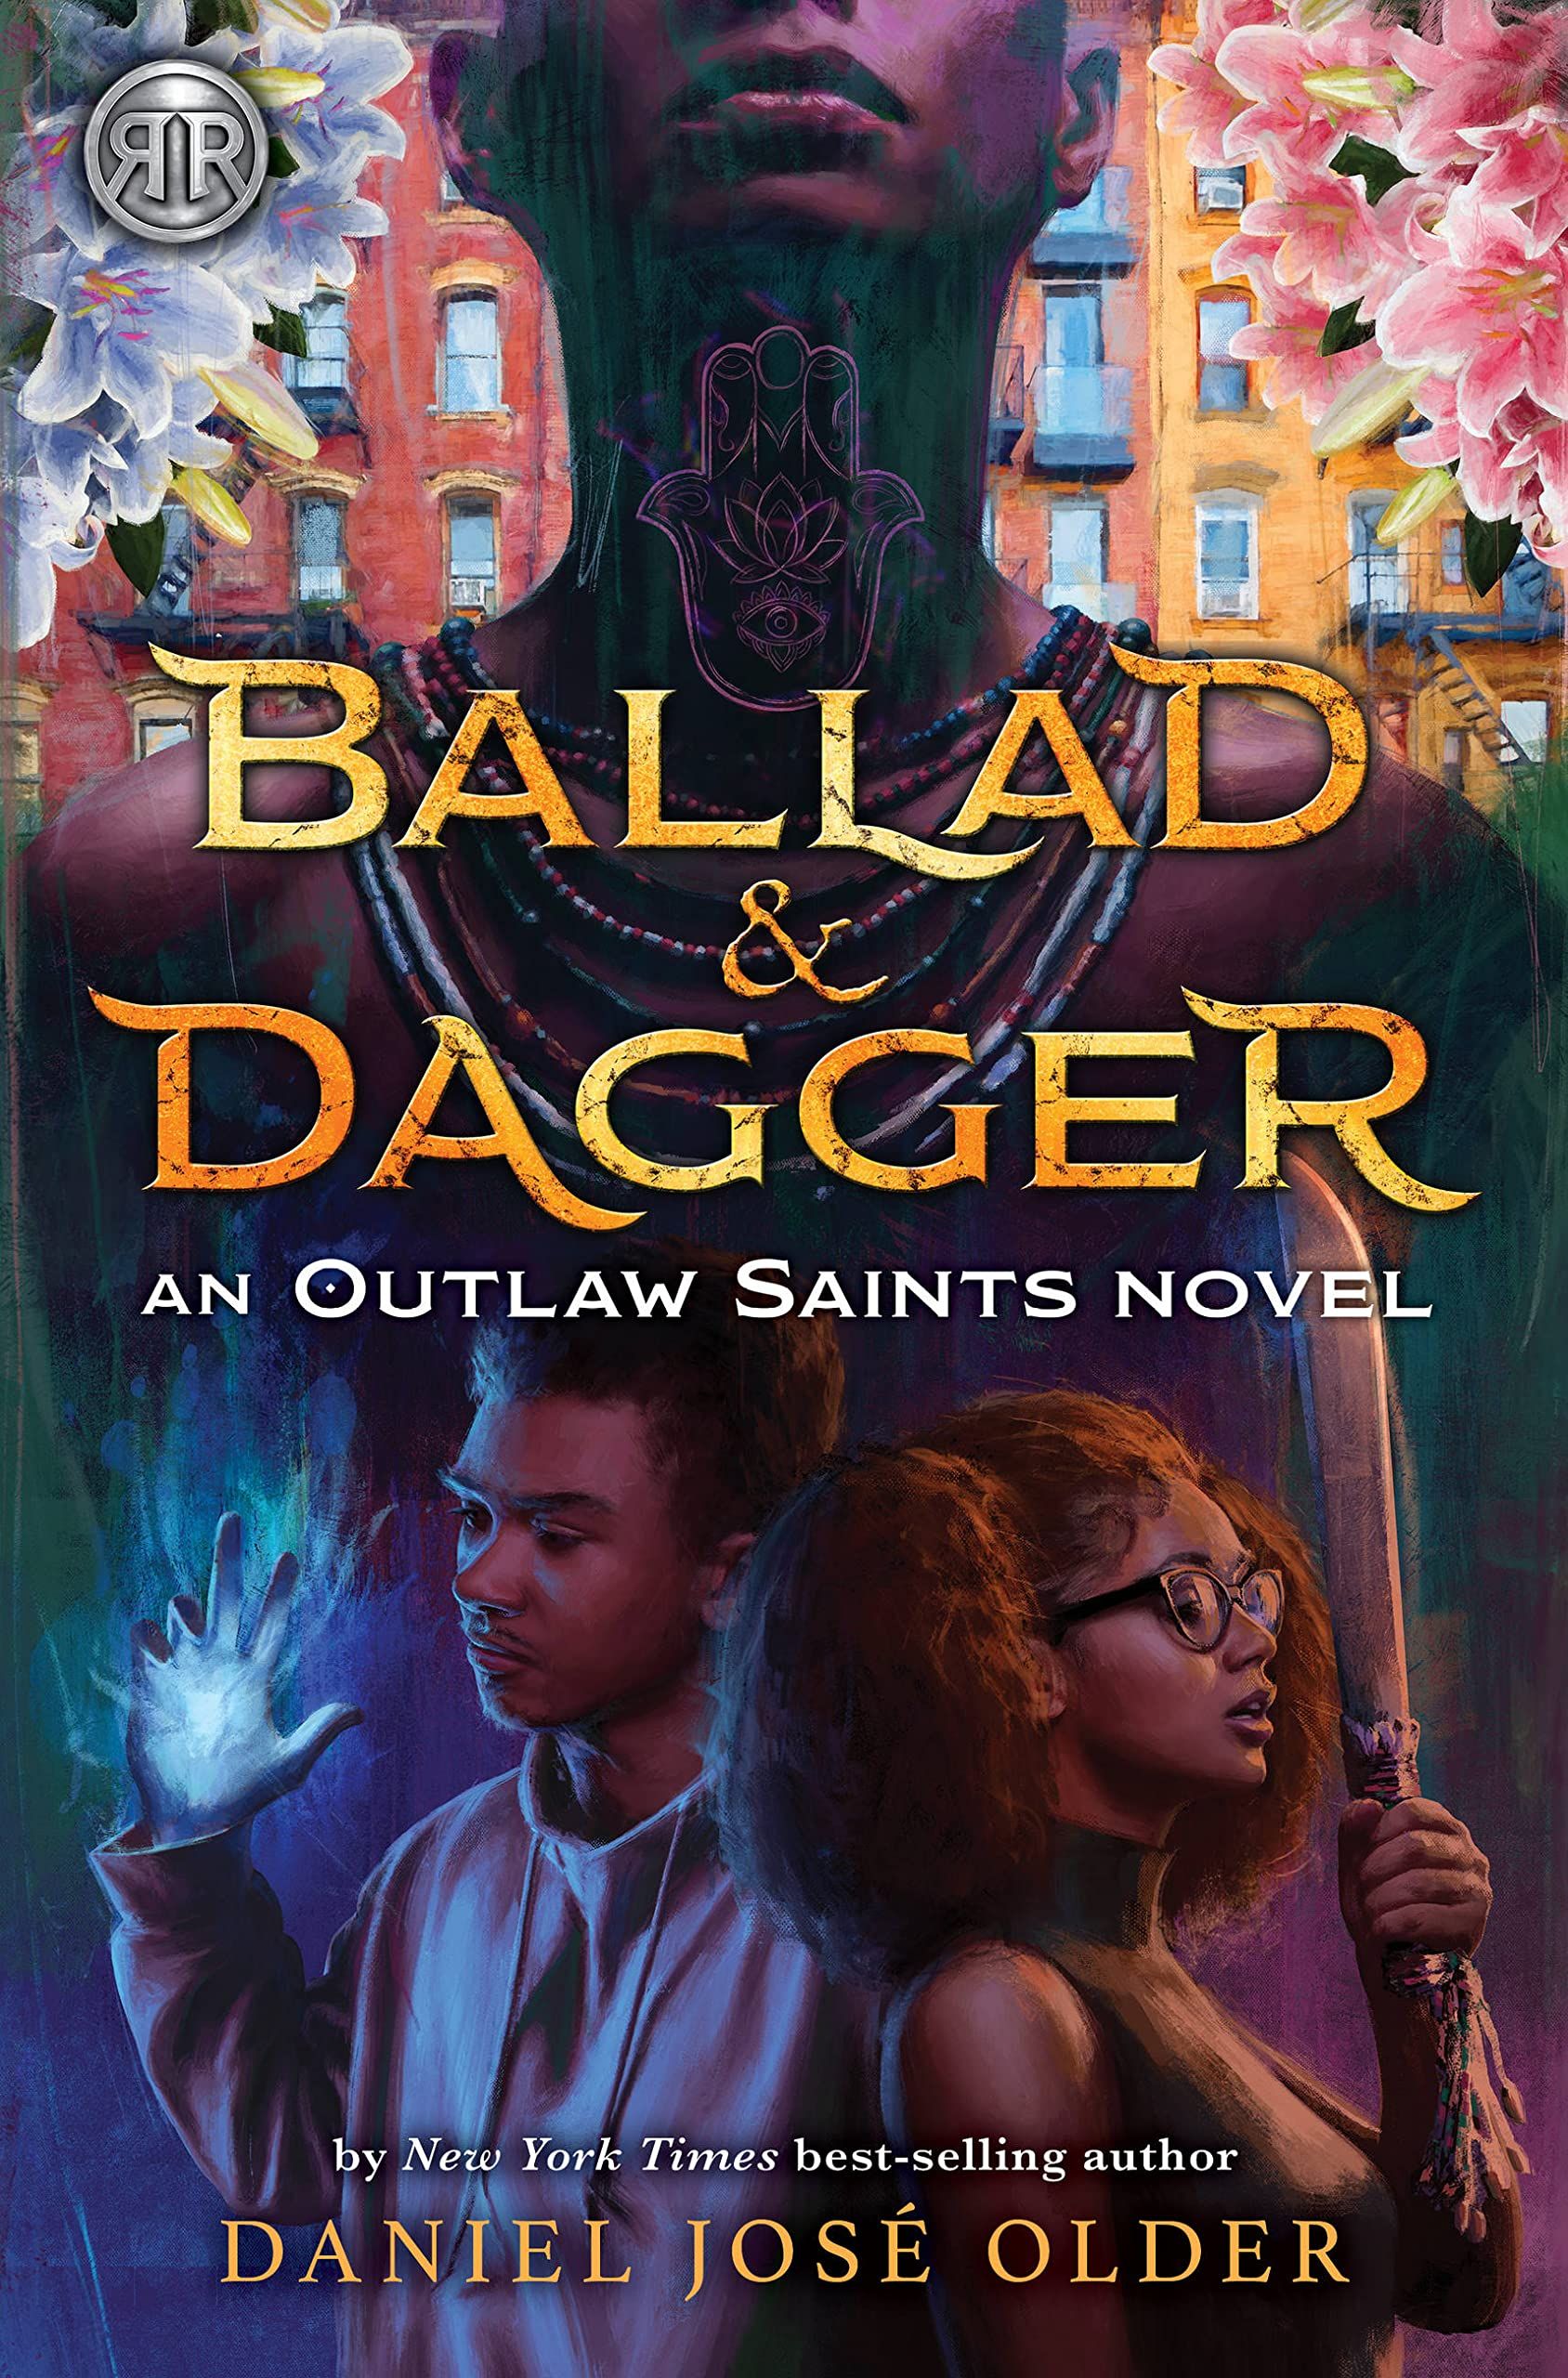 Ballad & Dagger cover